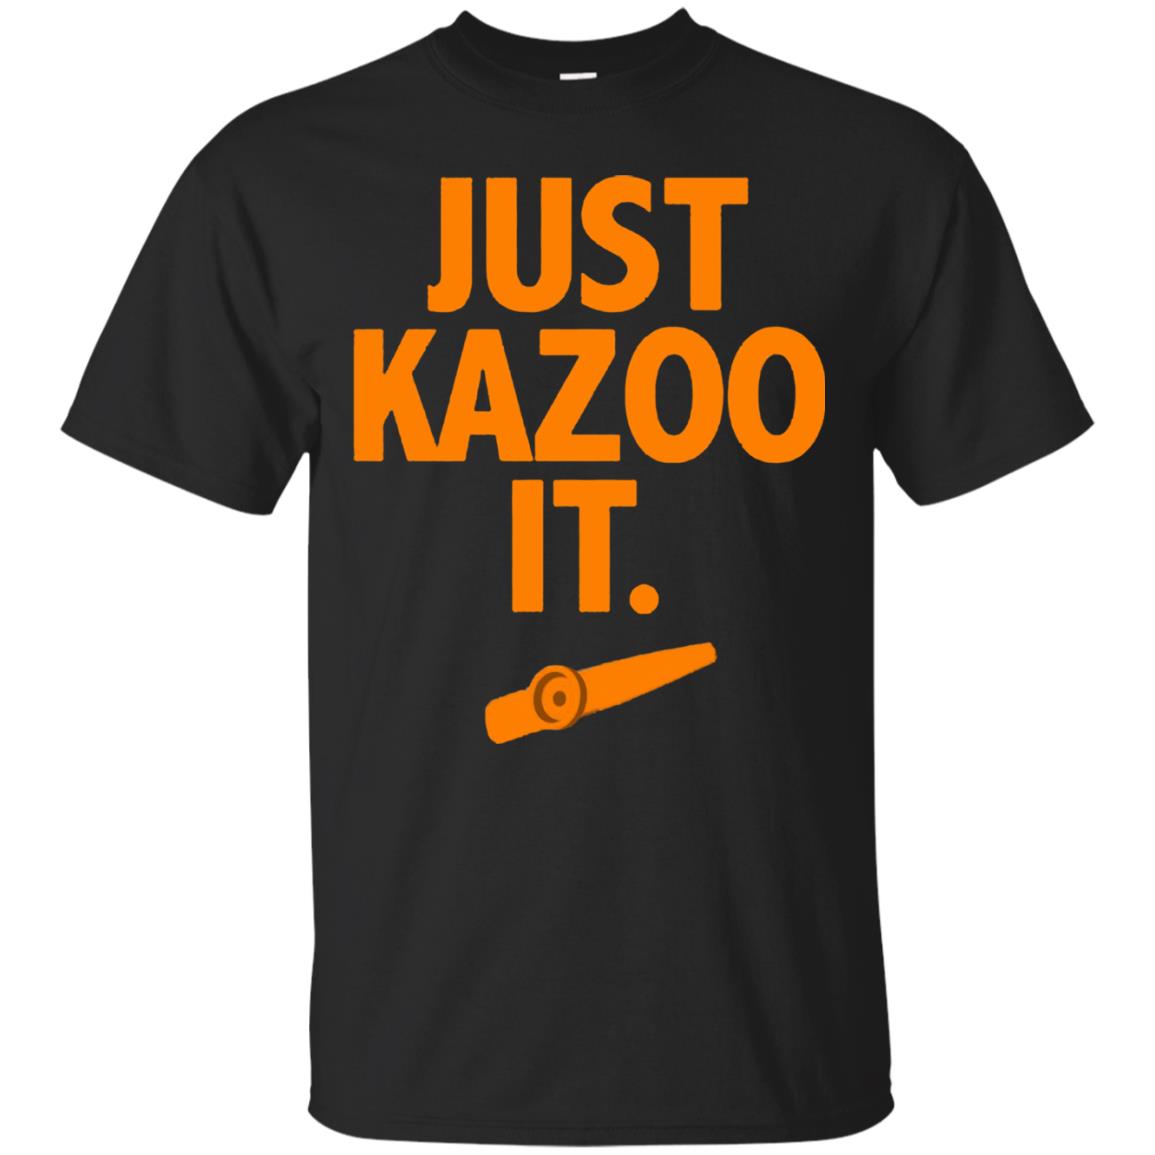 just kazoo it shirt - black